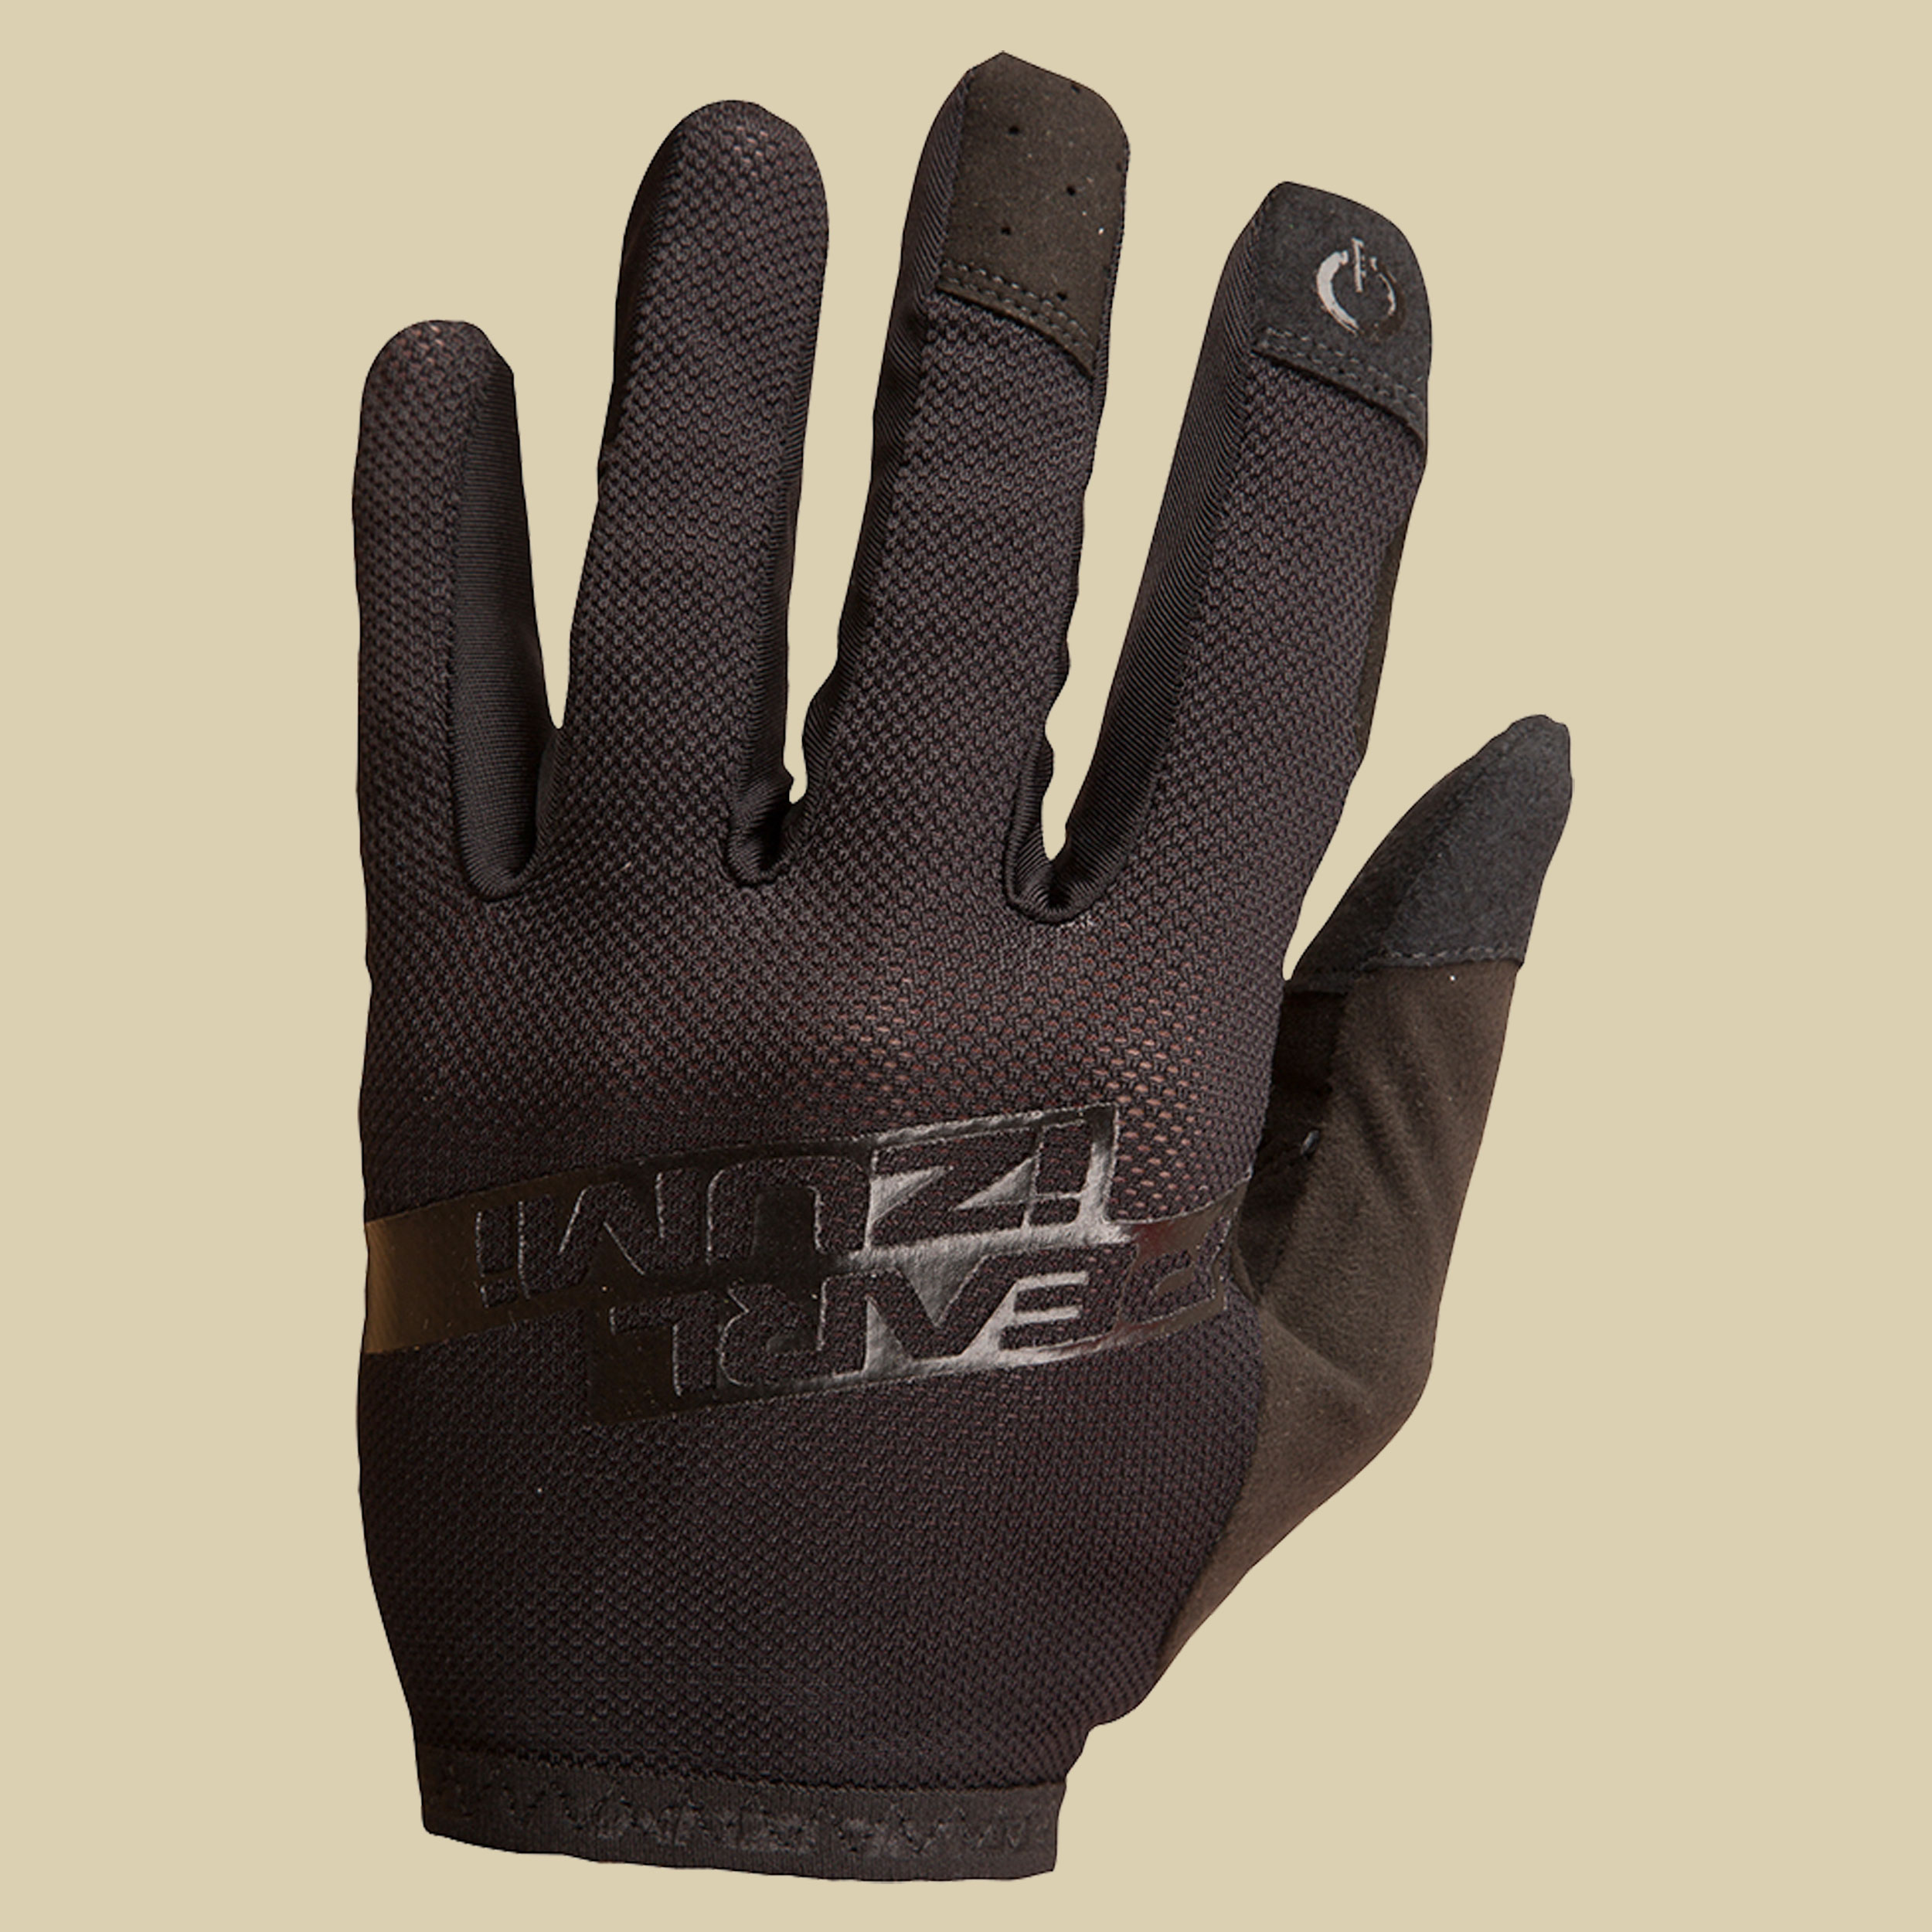 Divide Glove Größe XL Farbe black/black